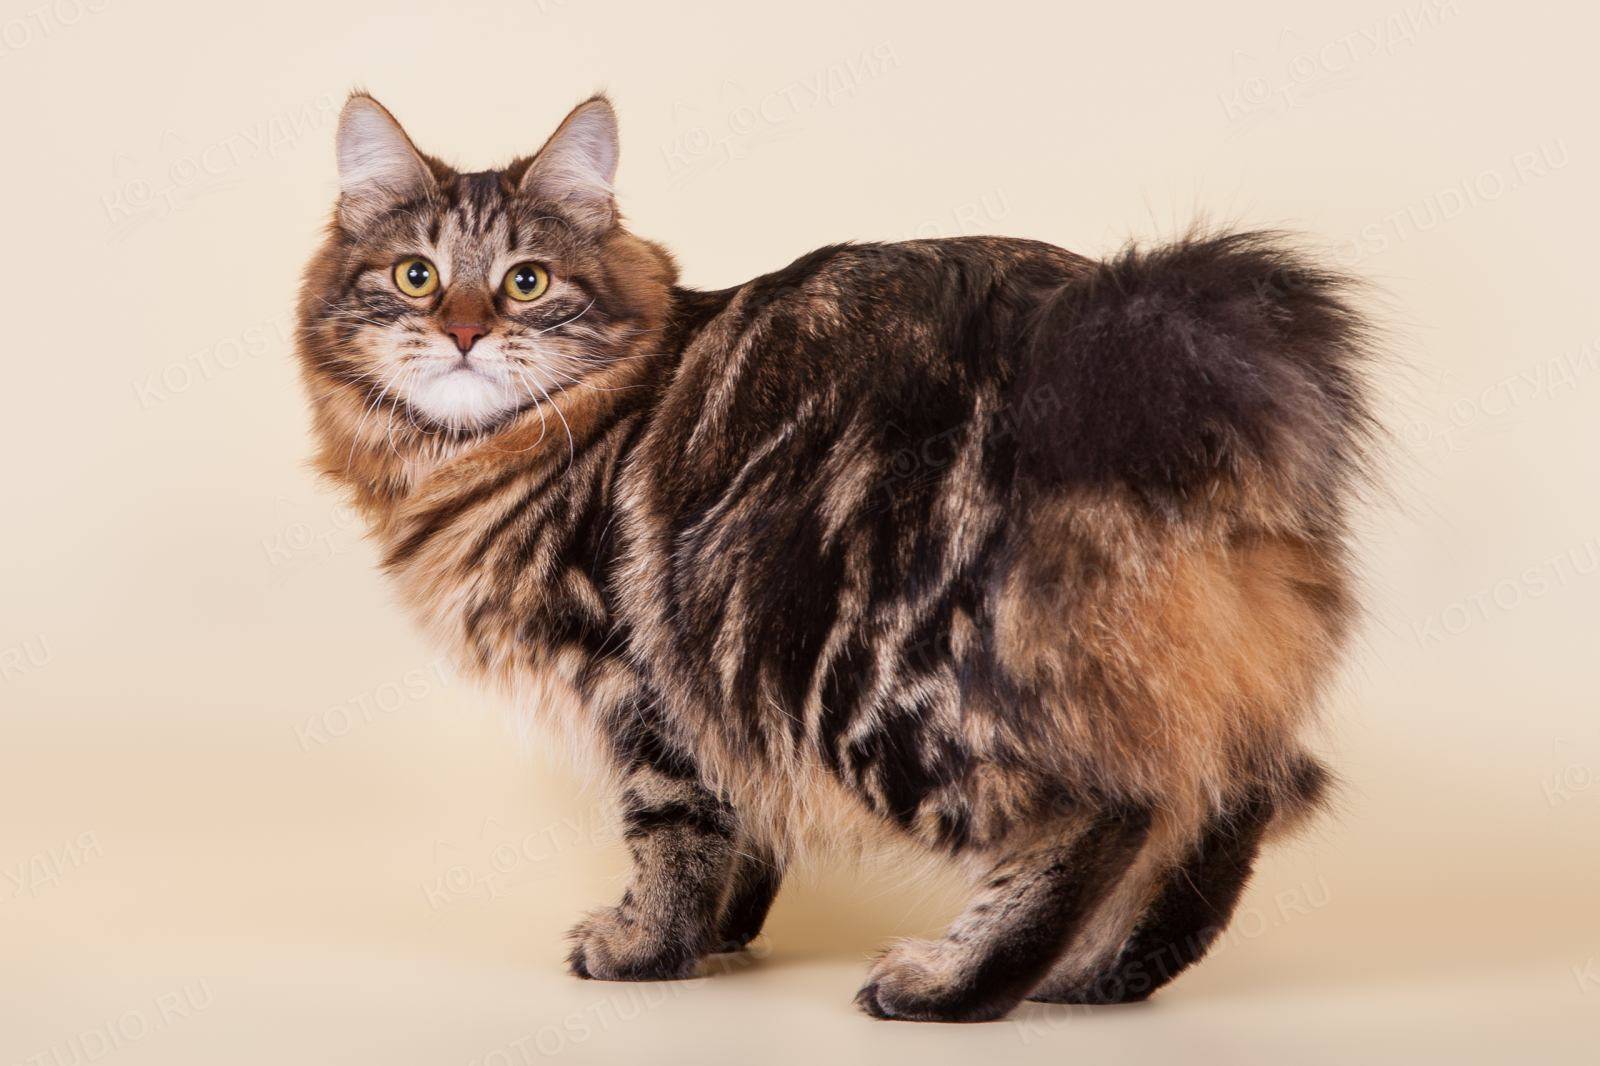 Кимрик: описание породы кошки, фото, характер, уход